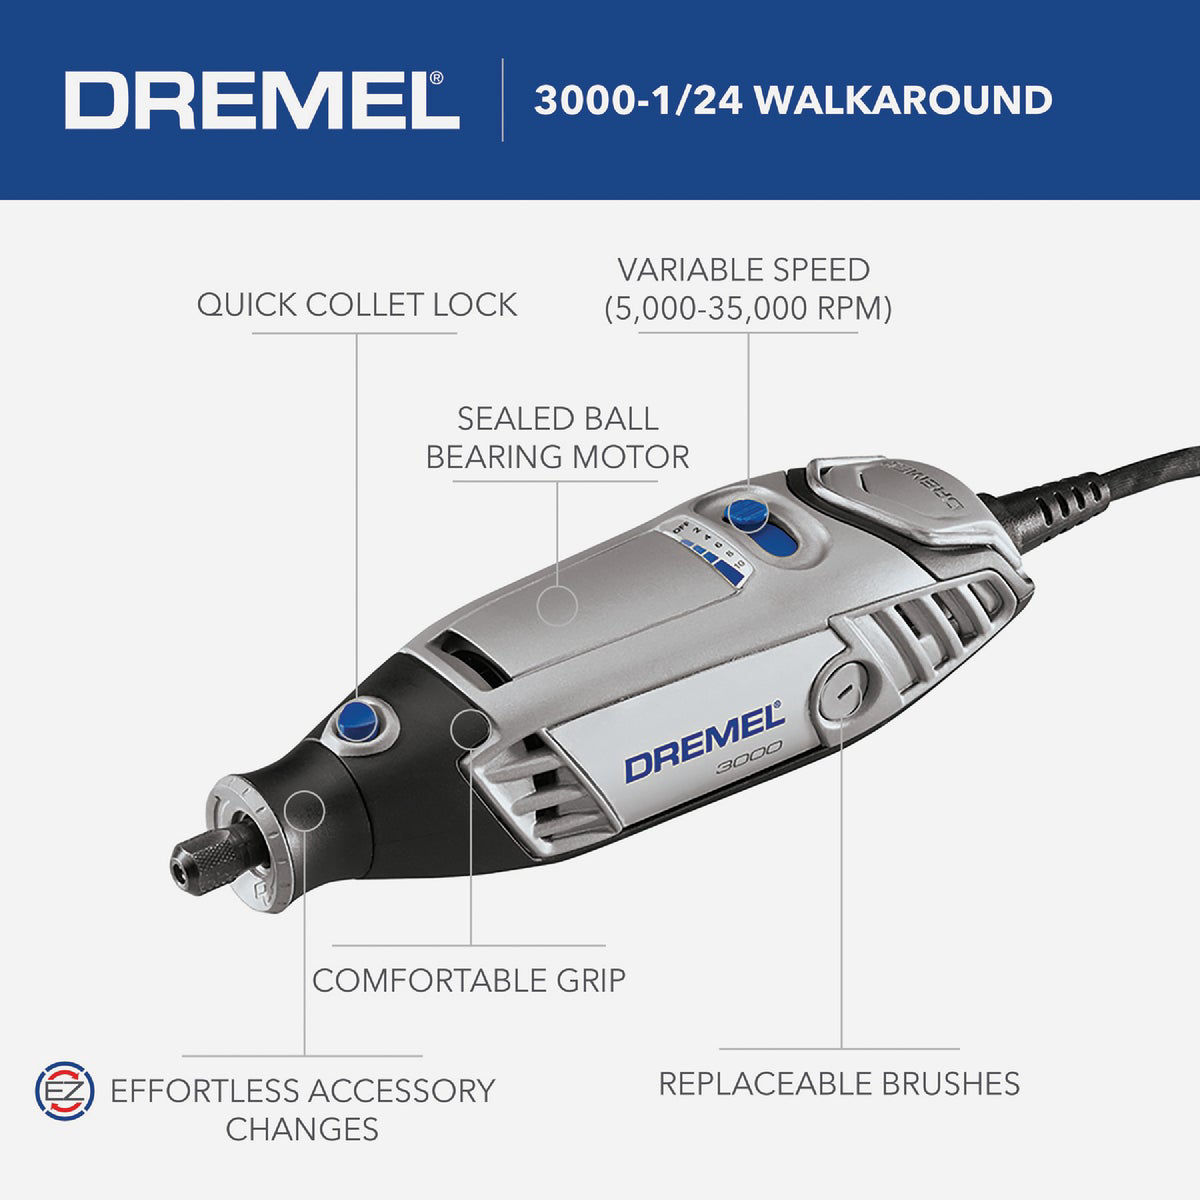 Dremel 3000-1/24 Variable Speed 120 volt Rotary Tool